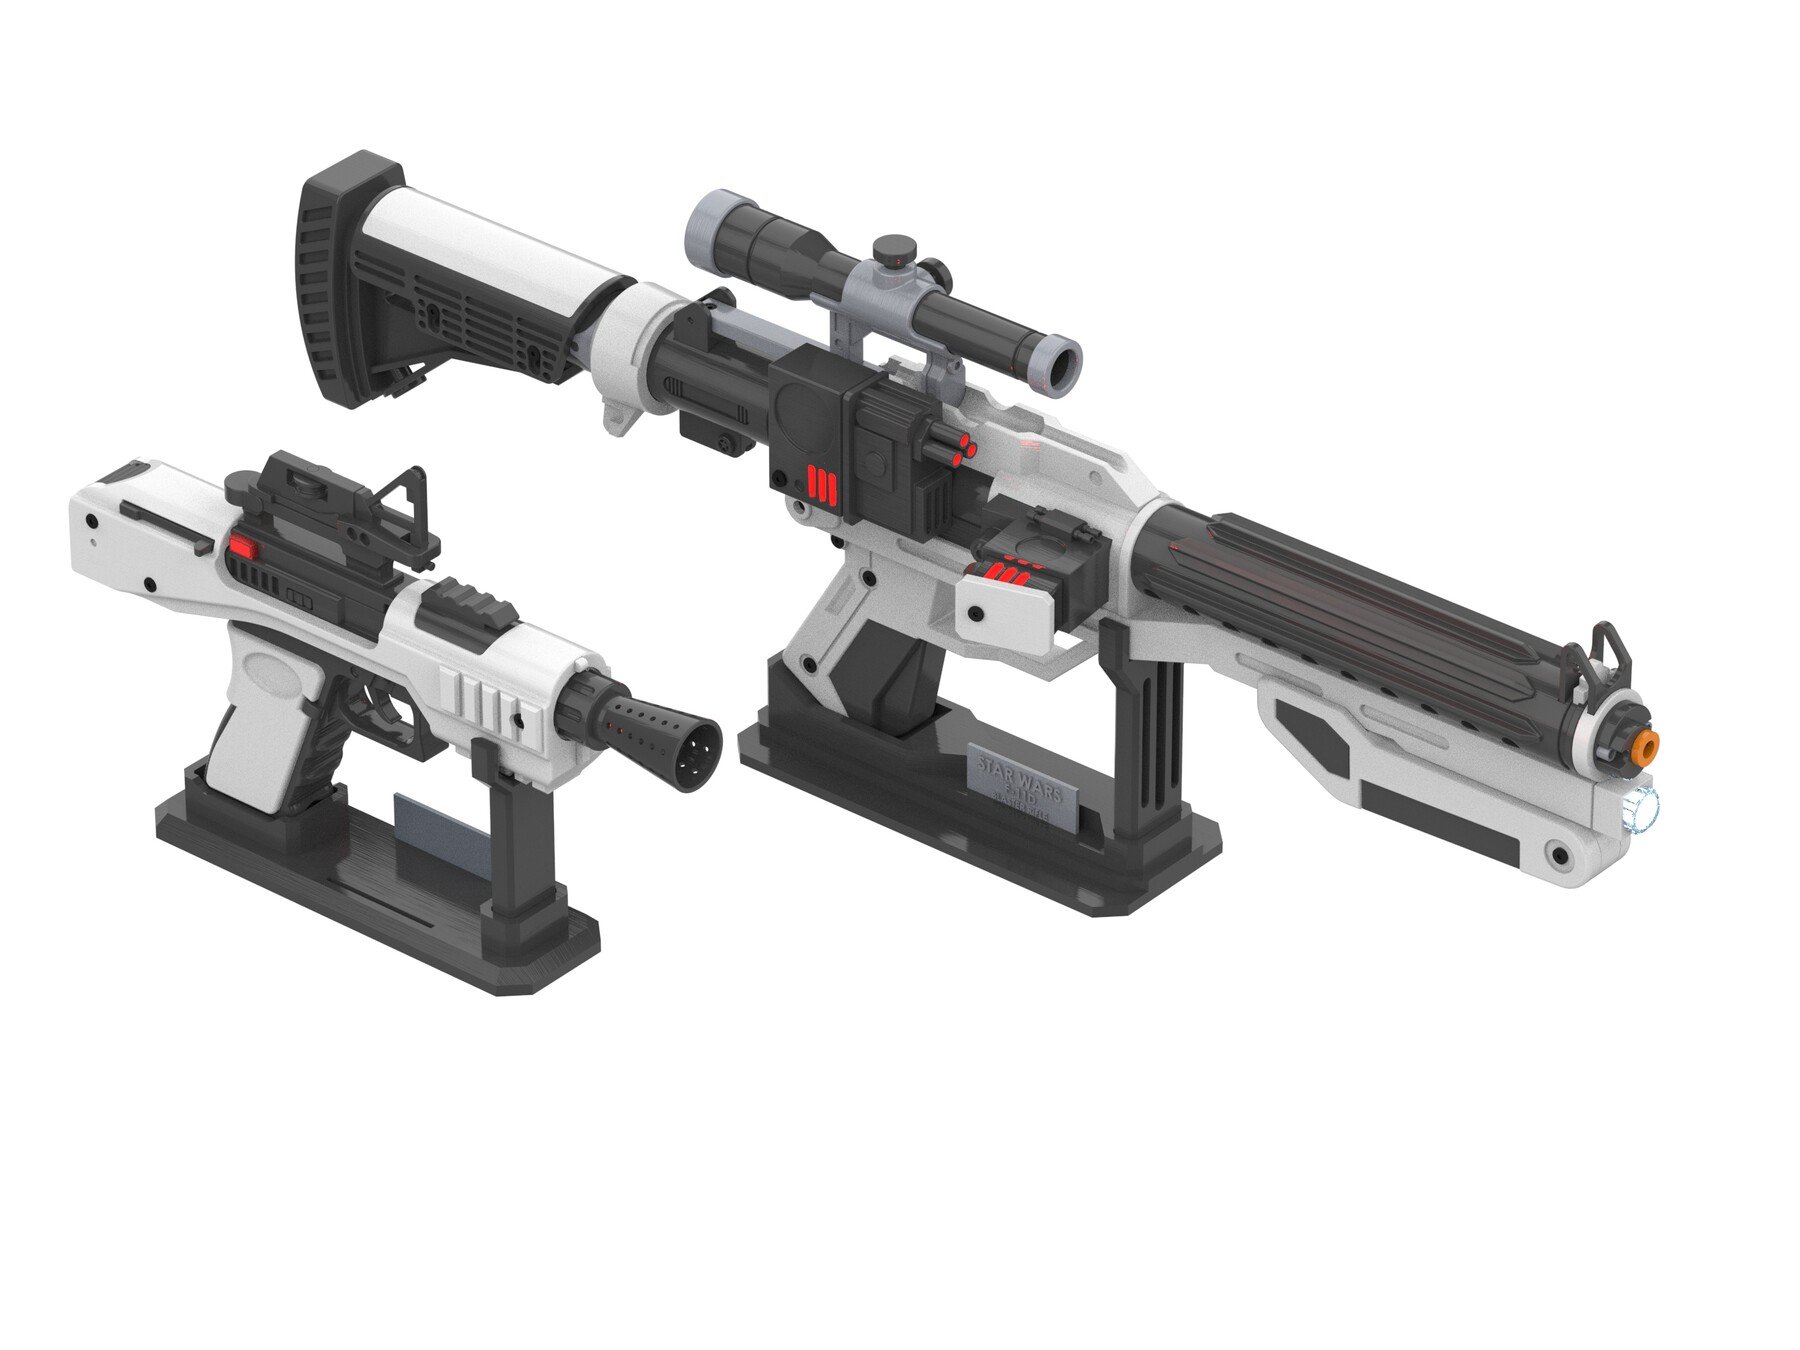 ArtStation - F-11D Blaster Rifle and SE44 Blaster - Star Wars